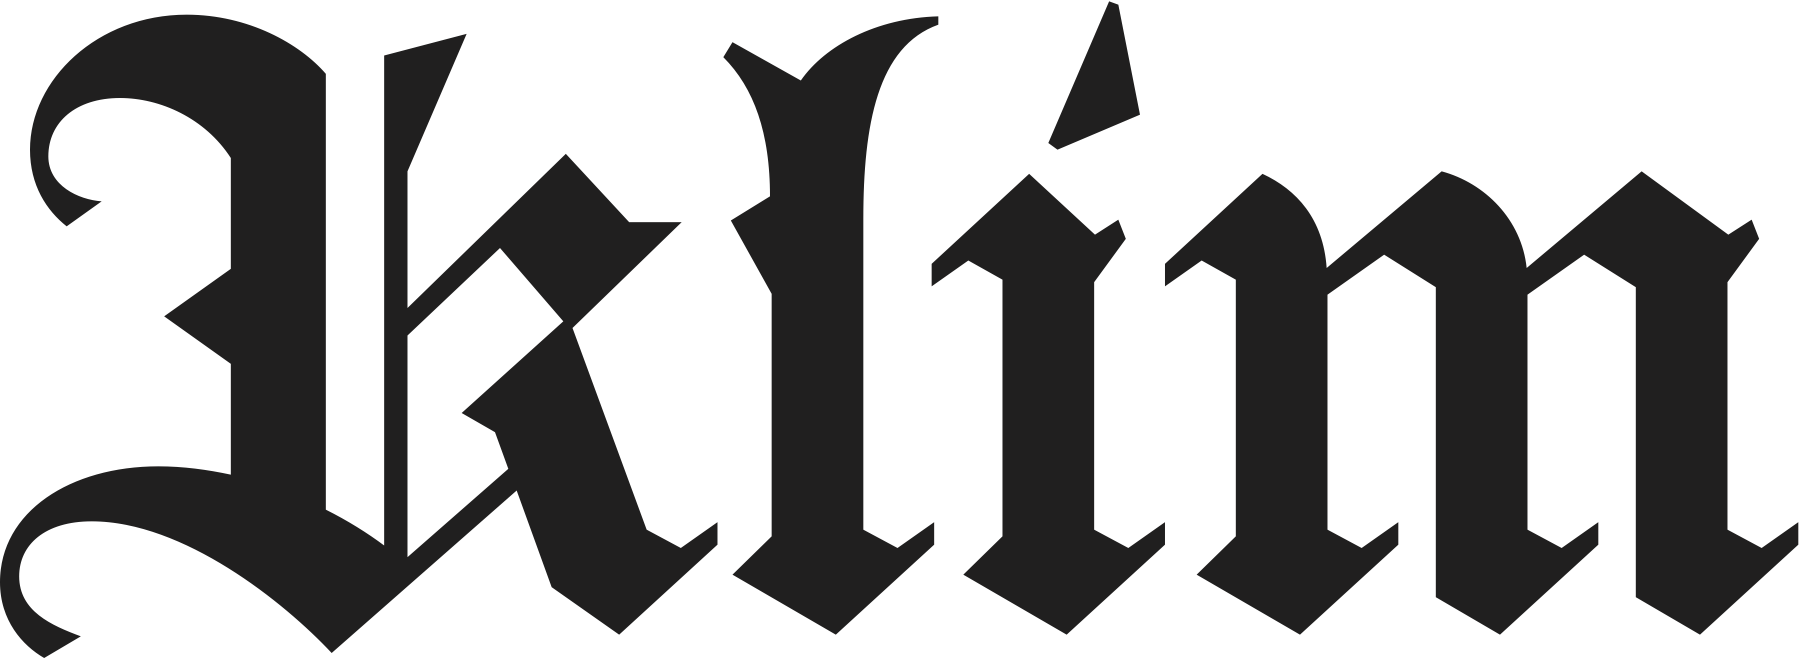 Klim-Logotype-Small